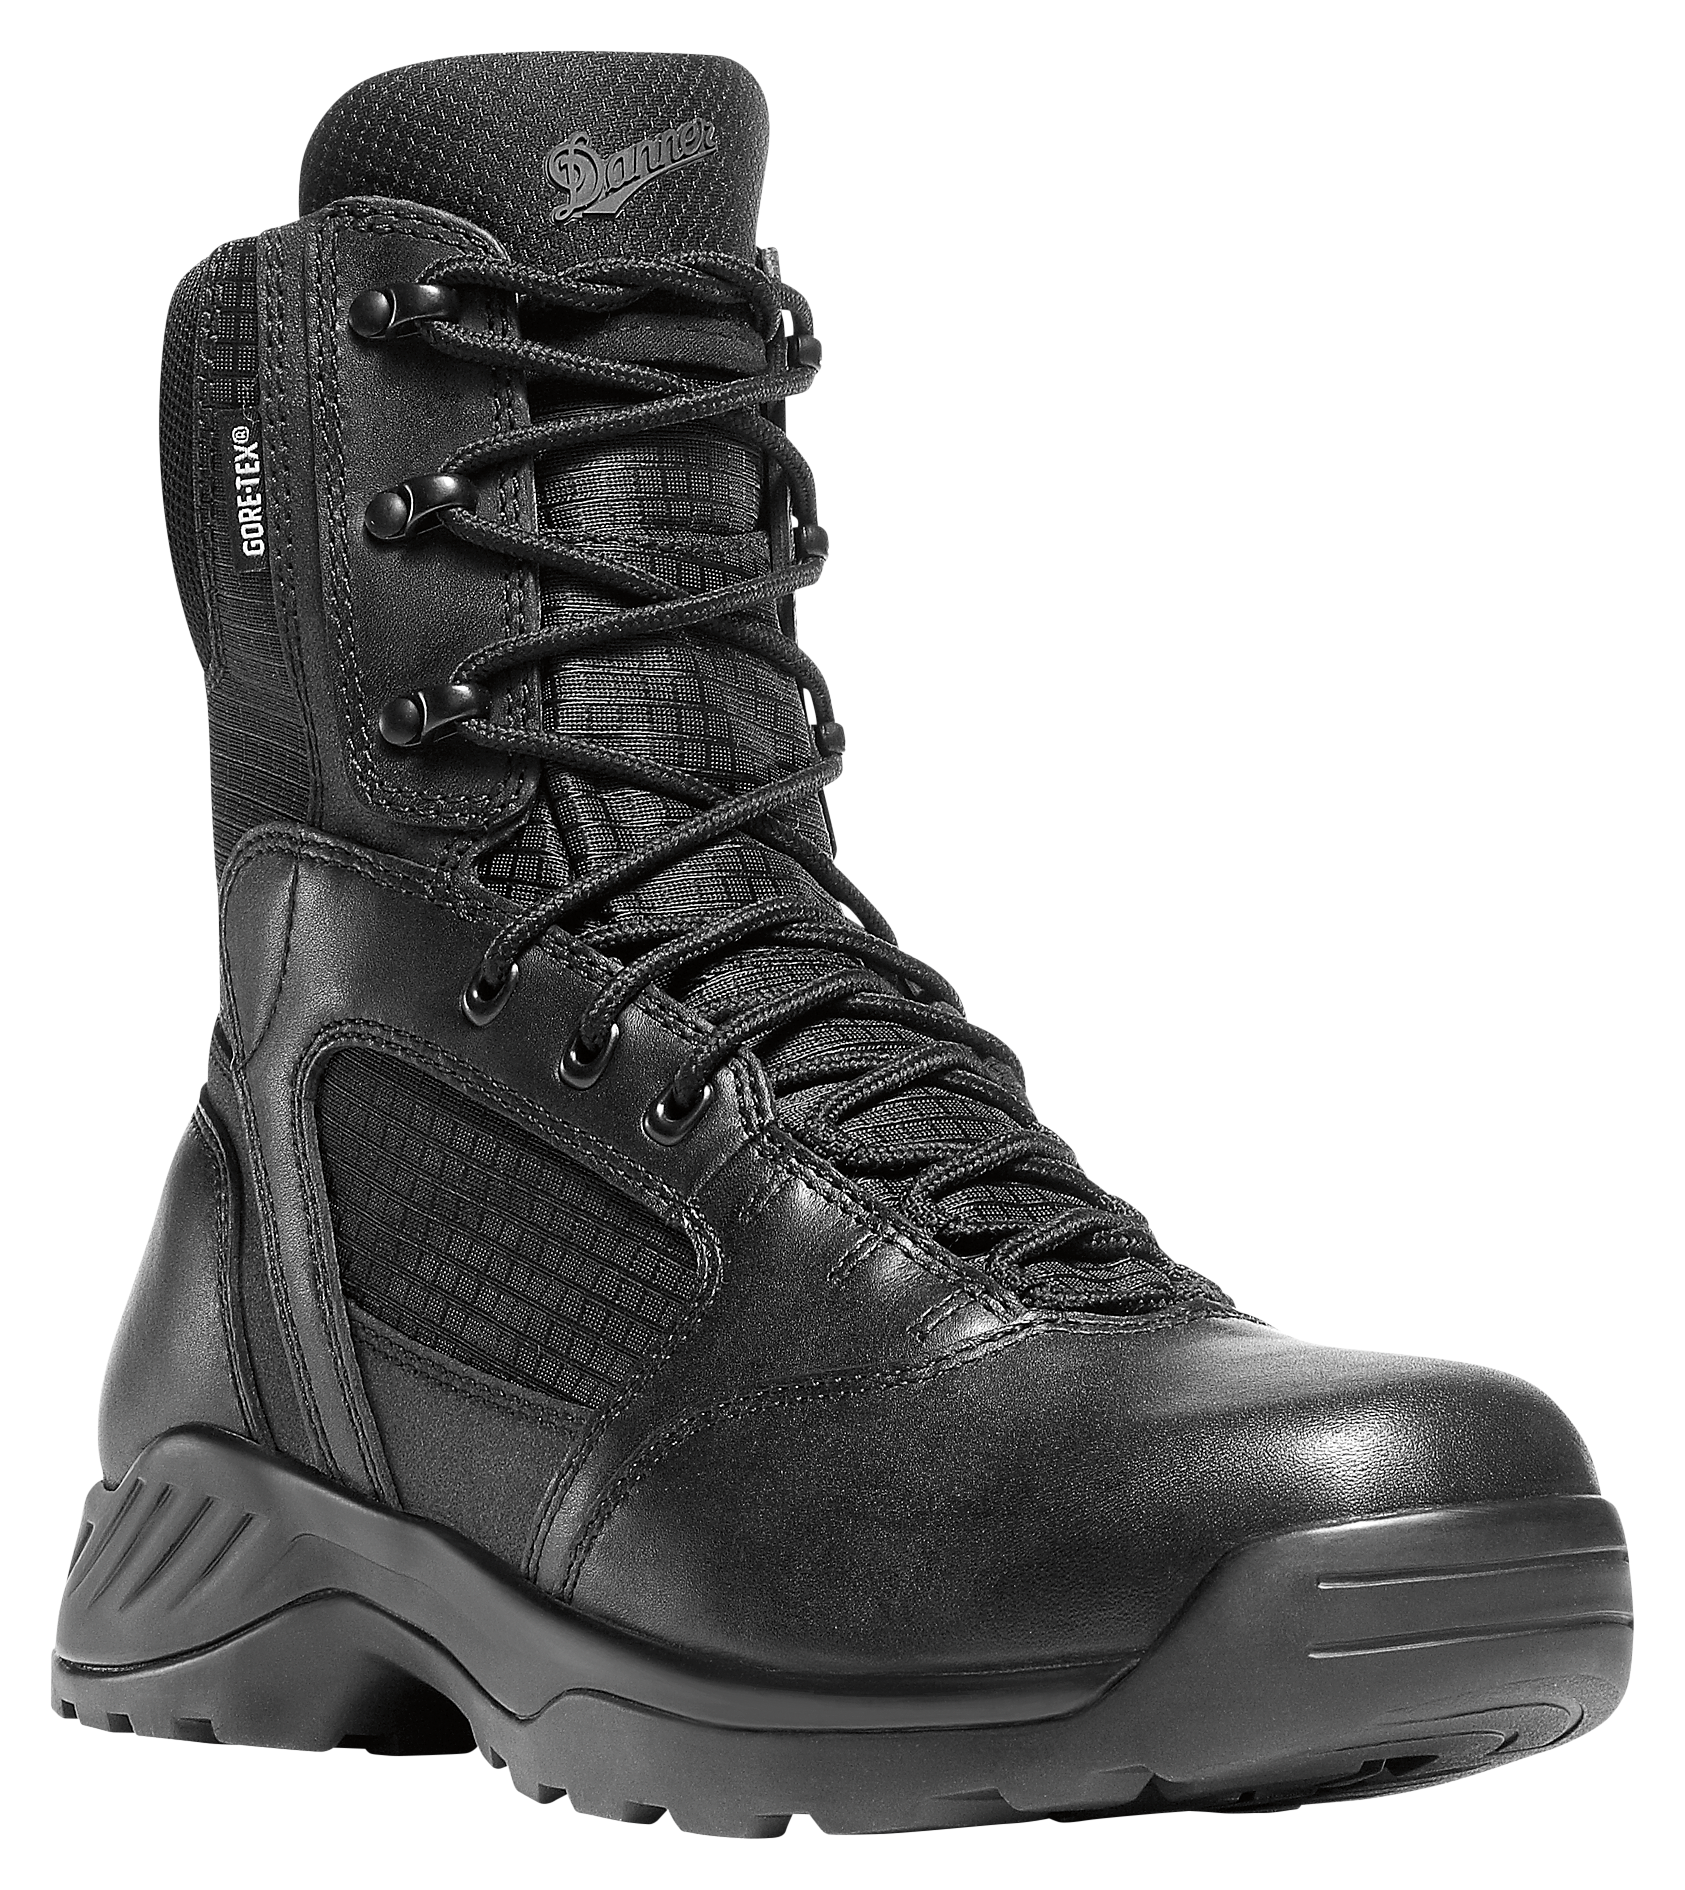 Danner Kinetic GTX Side-Zip Waterproof Tactical Duty Boots for Men - Black - 7M